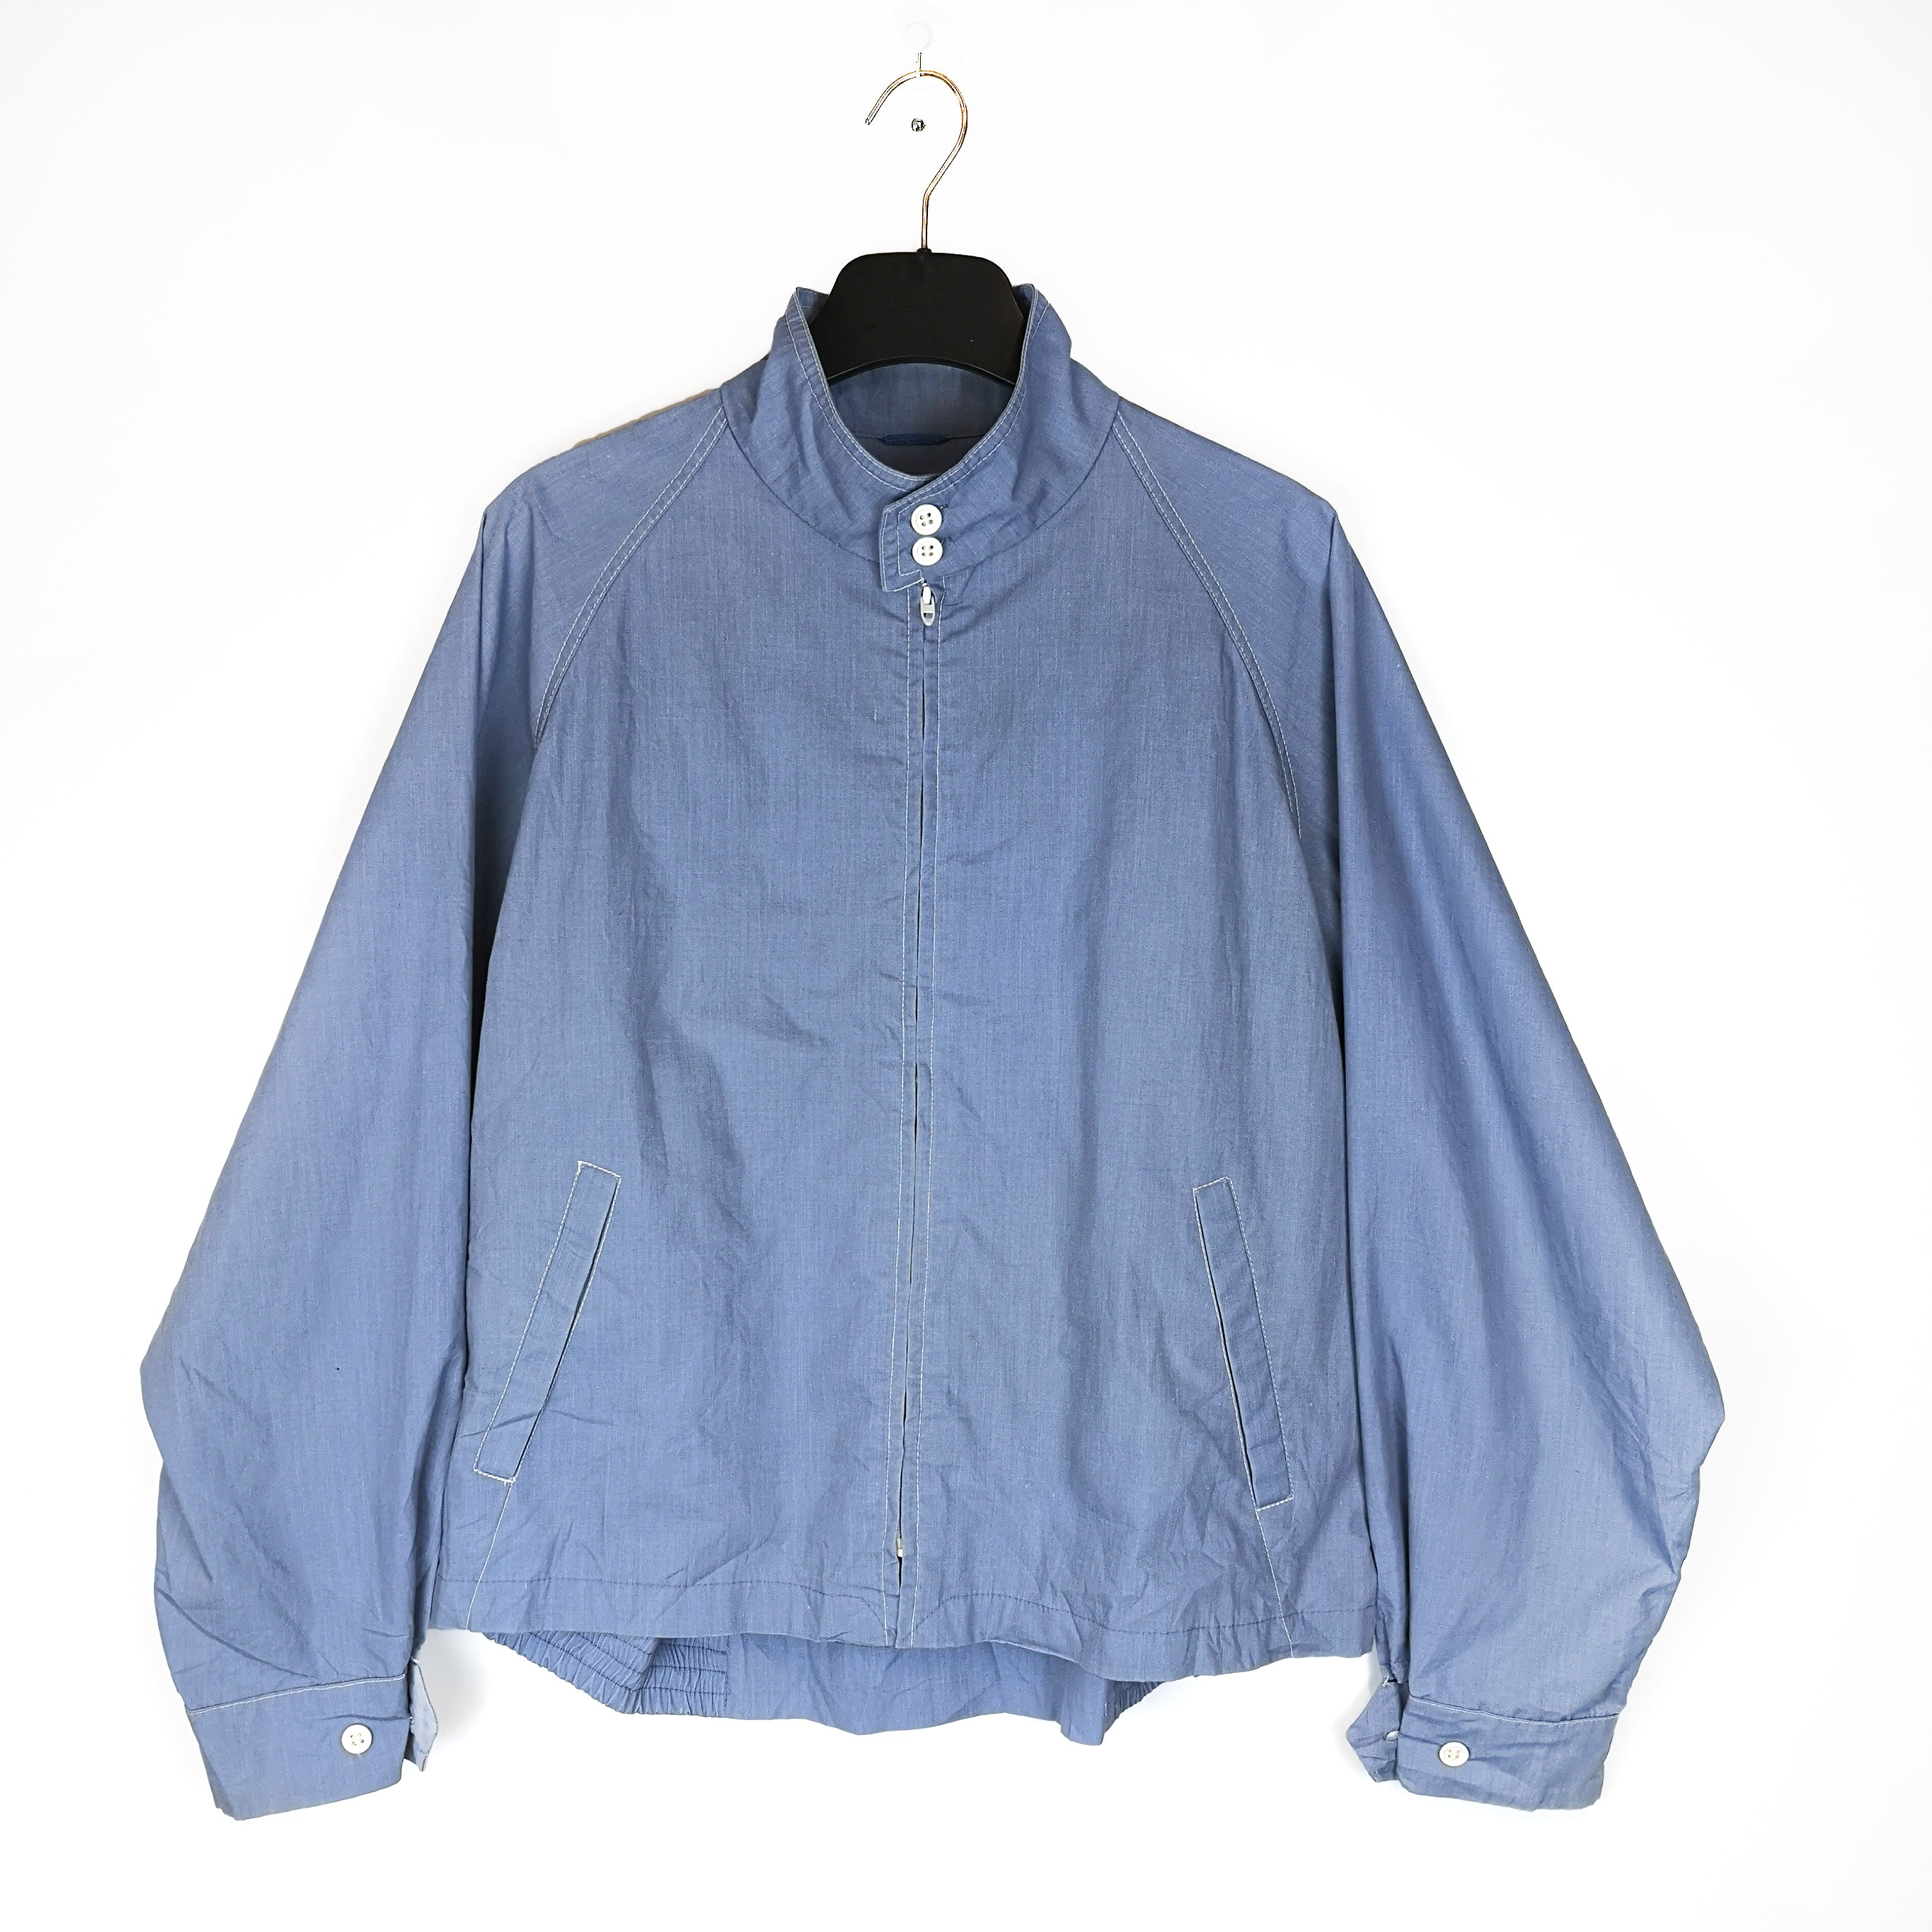 London Fog Cotton Bomber Jacket (Blue)